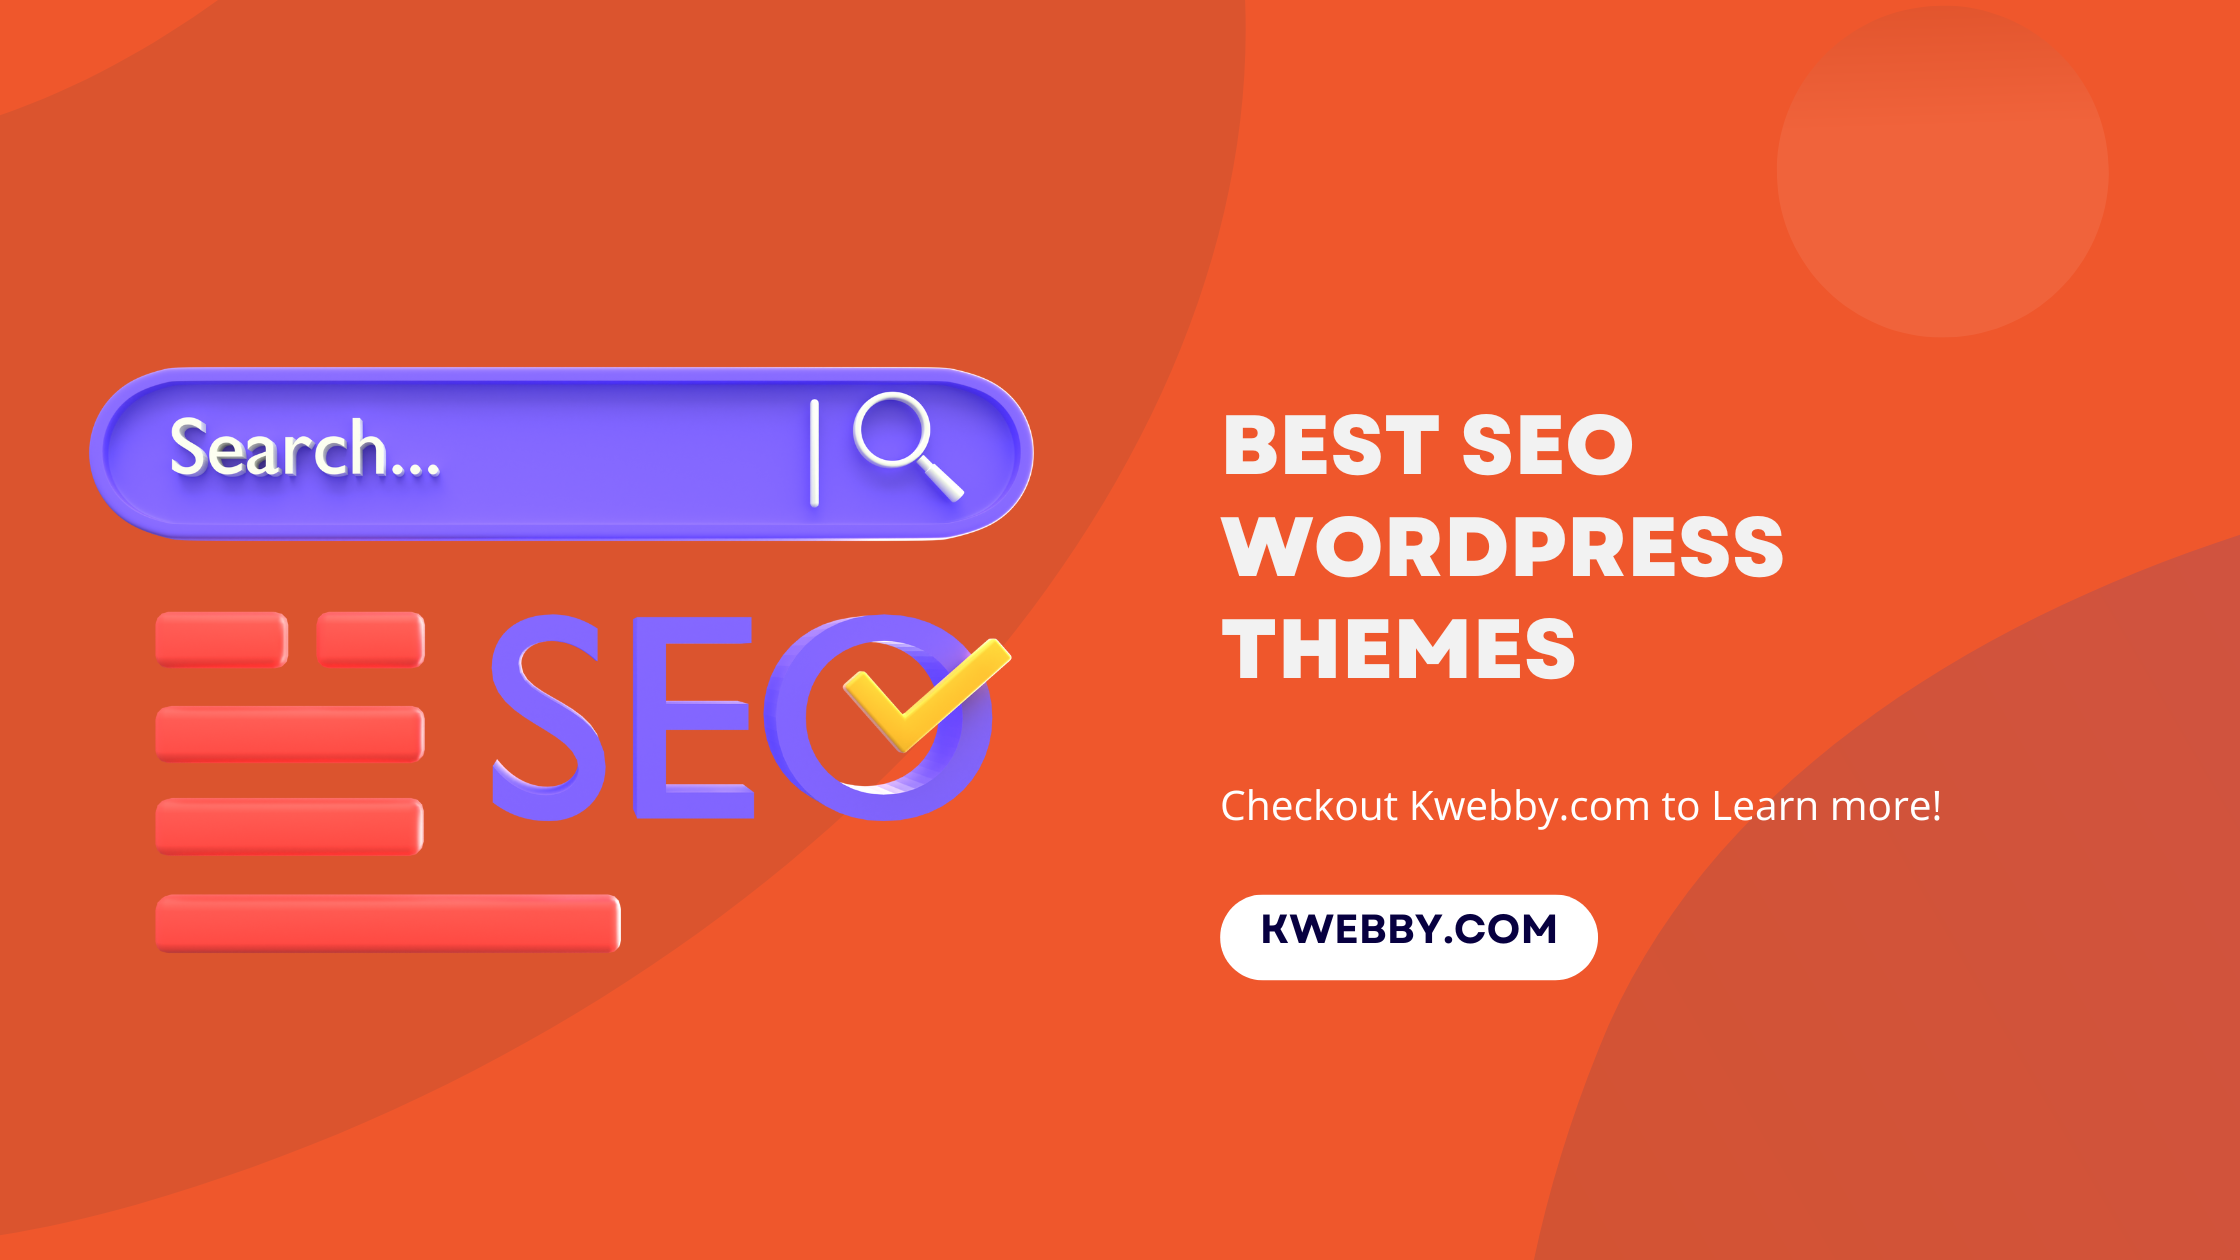 Best SEO WordPress Themes